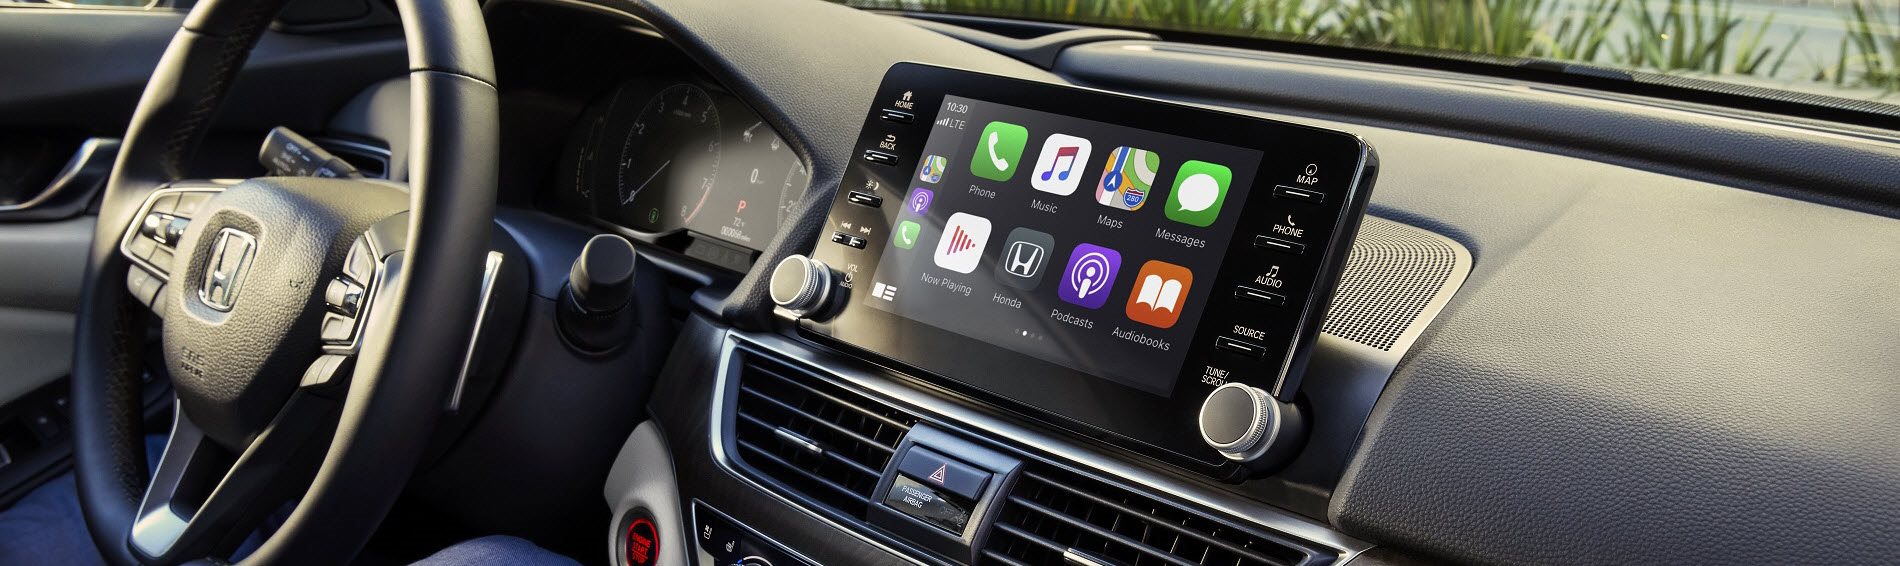 How to use Apple CarPlay in Honda vehicles